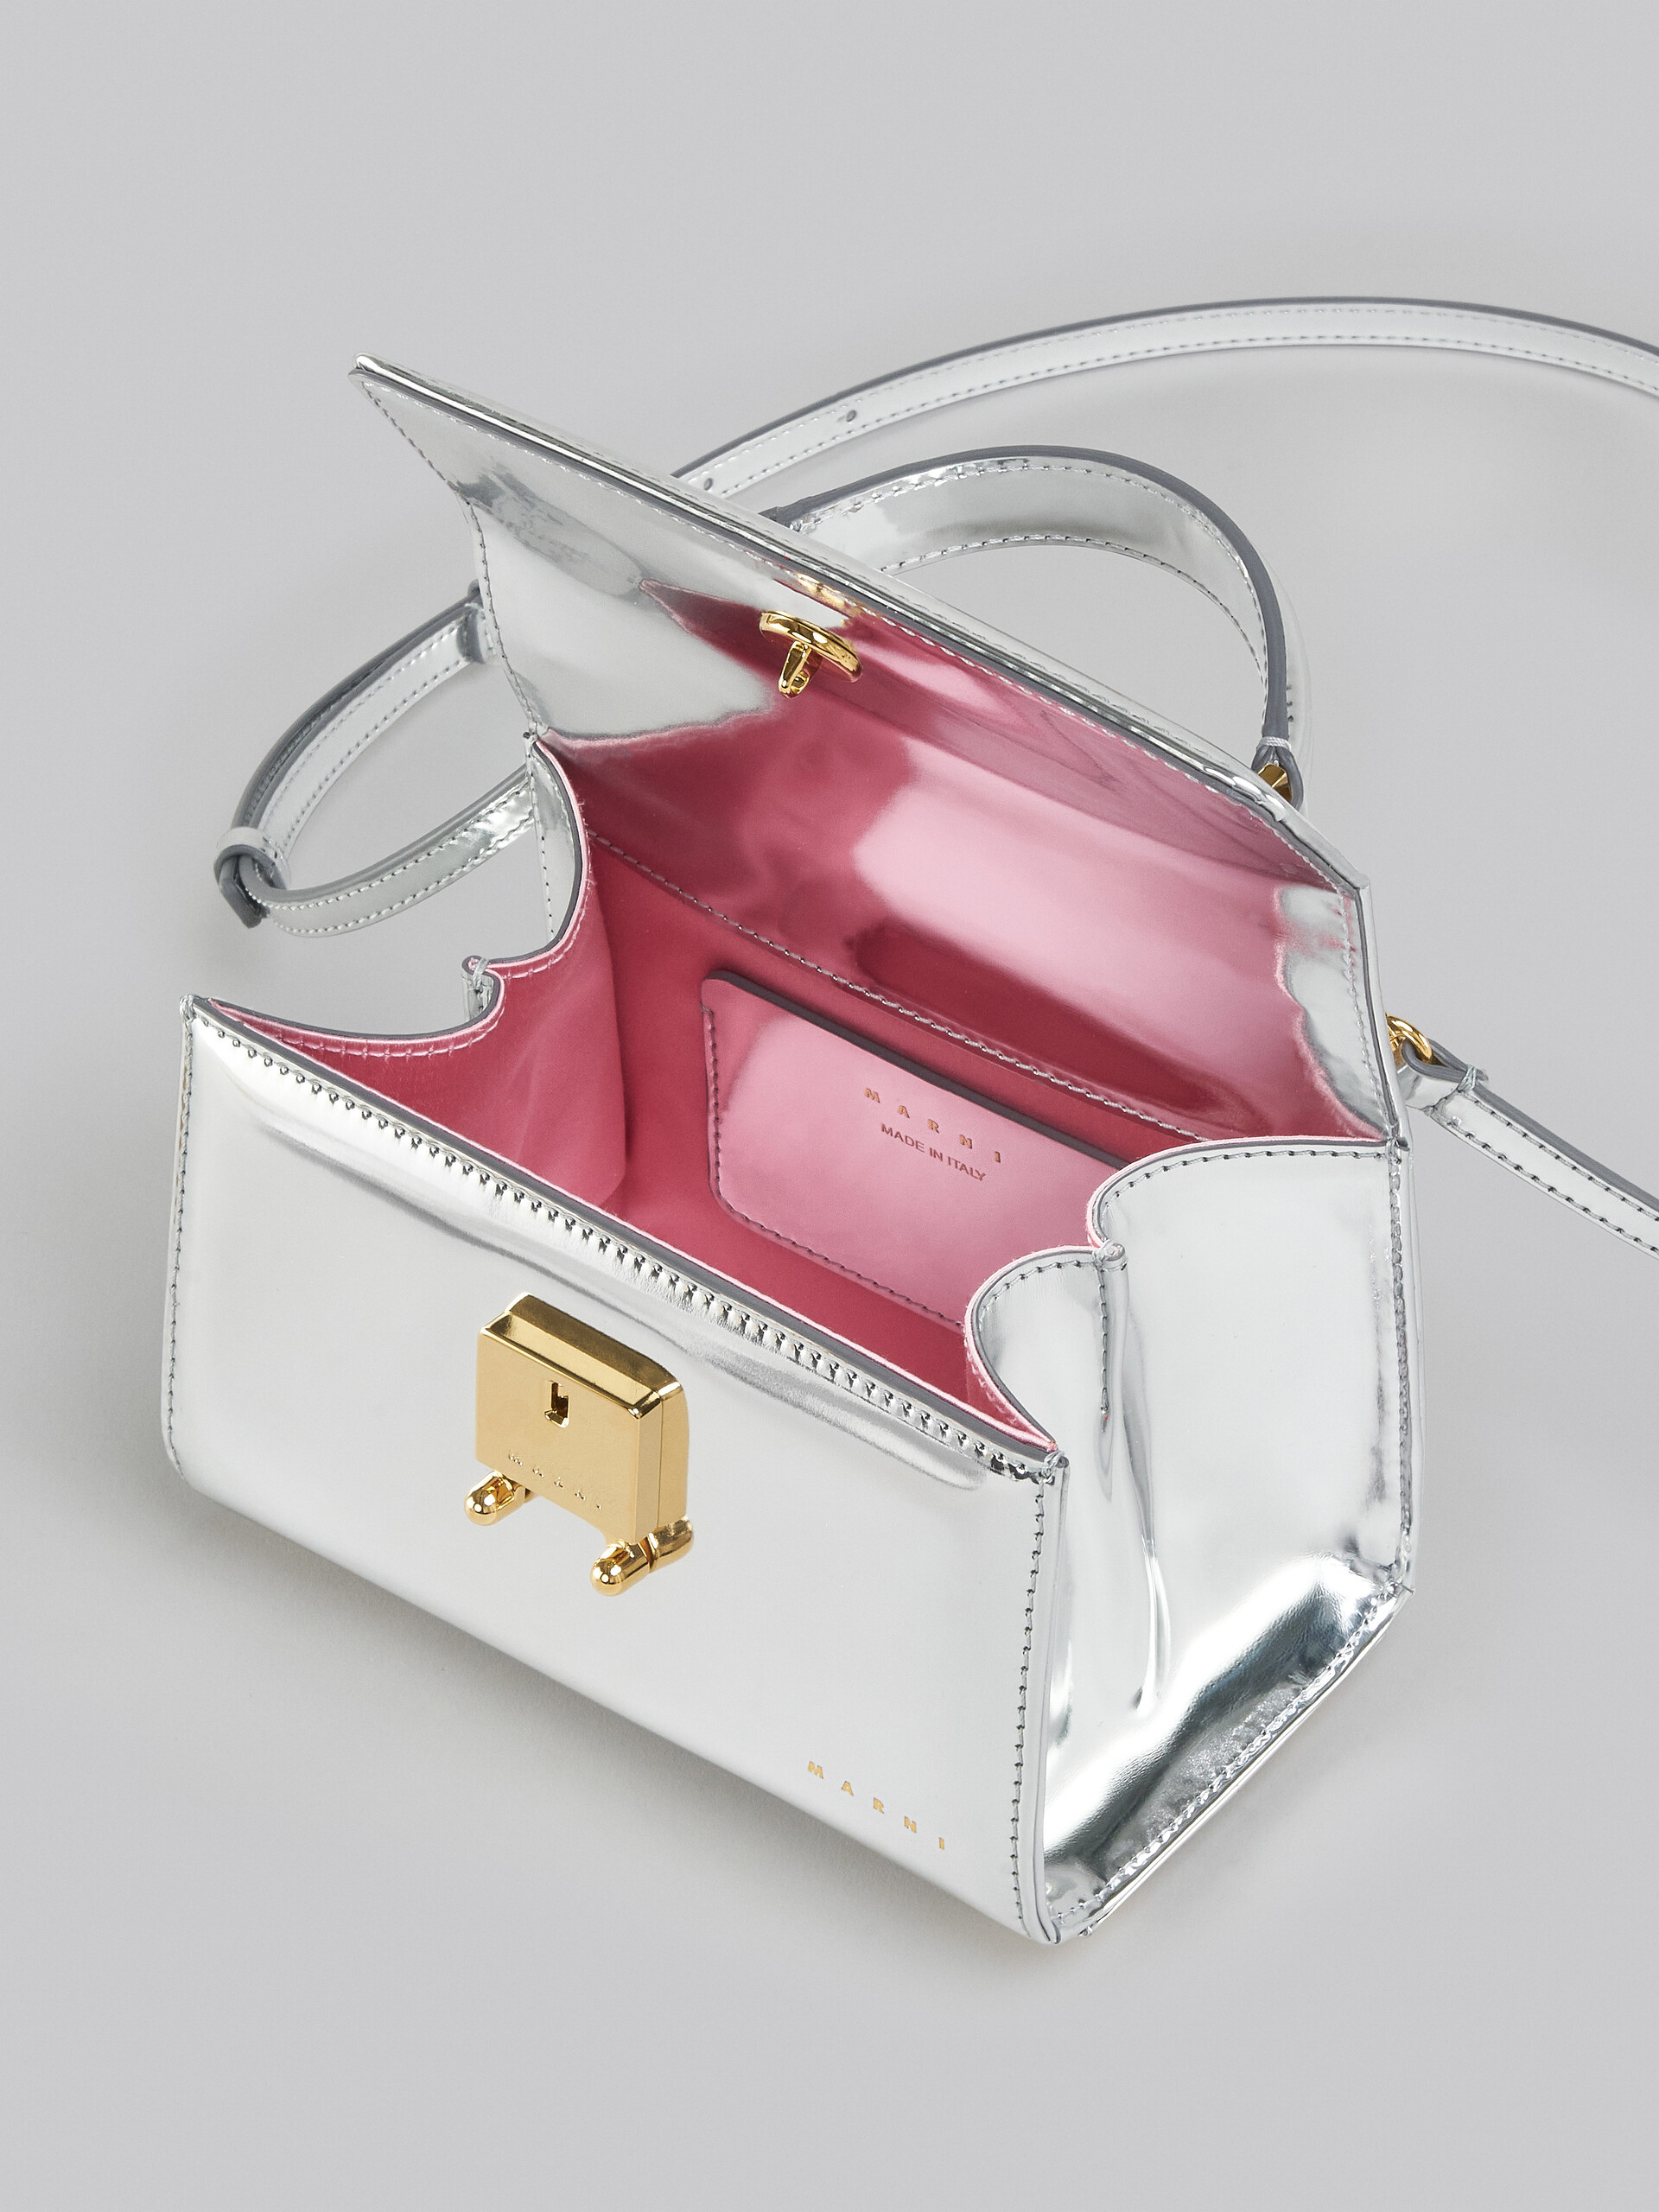 Relativity Mini Bag in silver mirrored leather - Handbags - Image 4